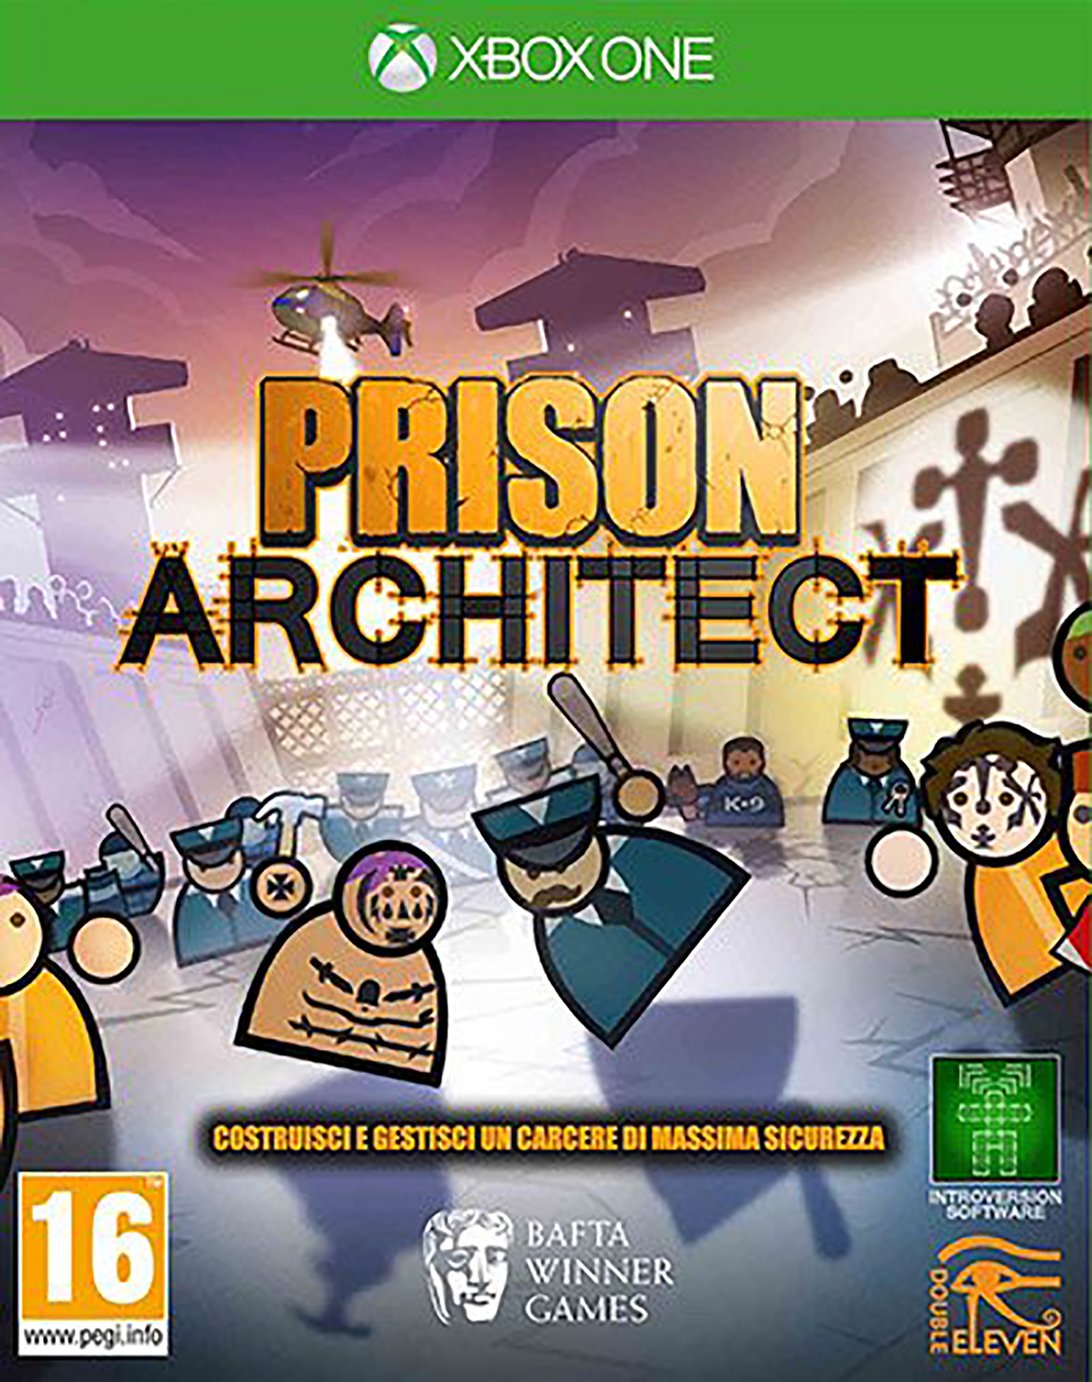 Prison Architect - Xbox - One Game. Review thumbnail